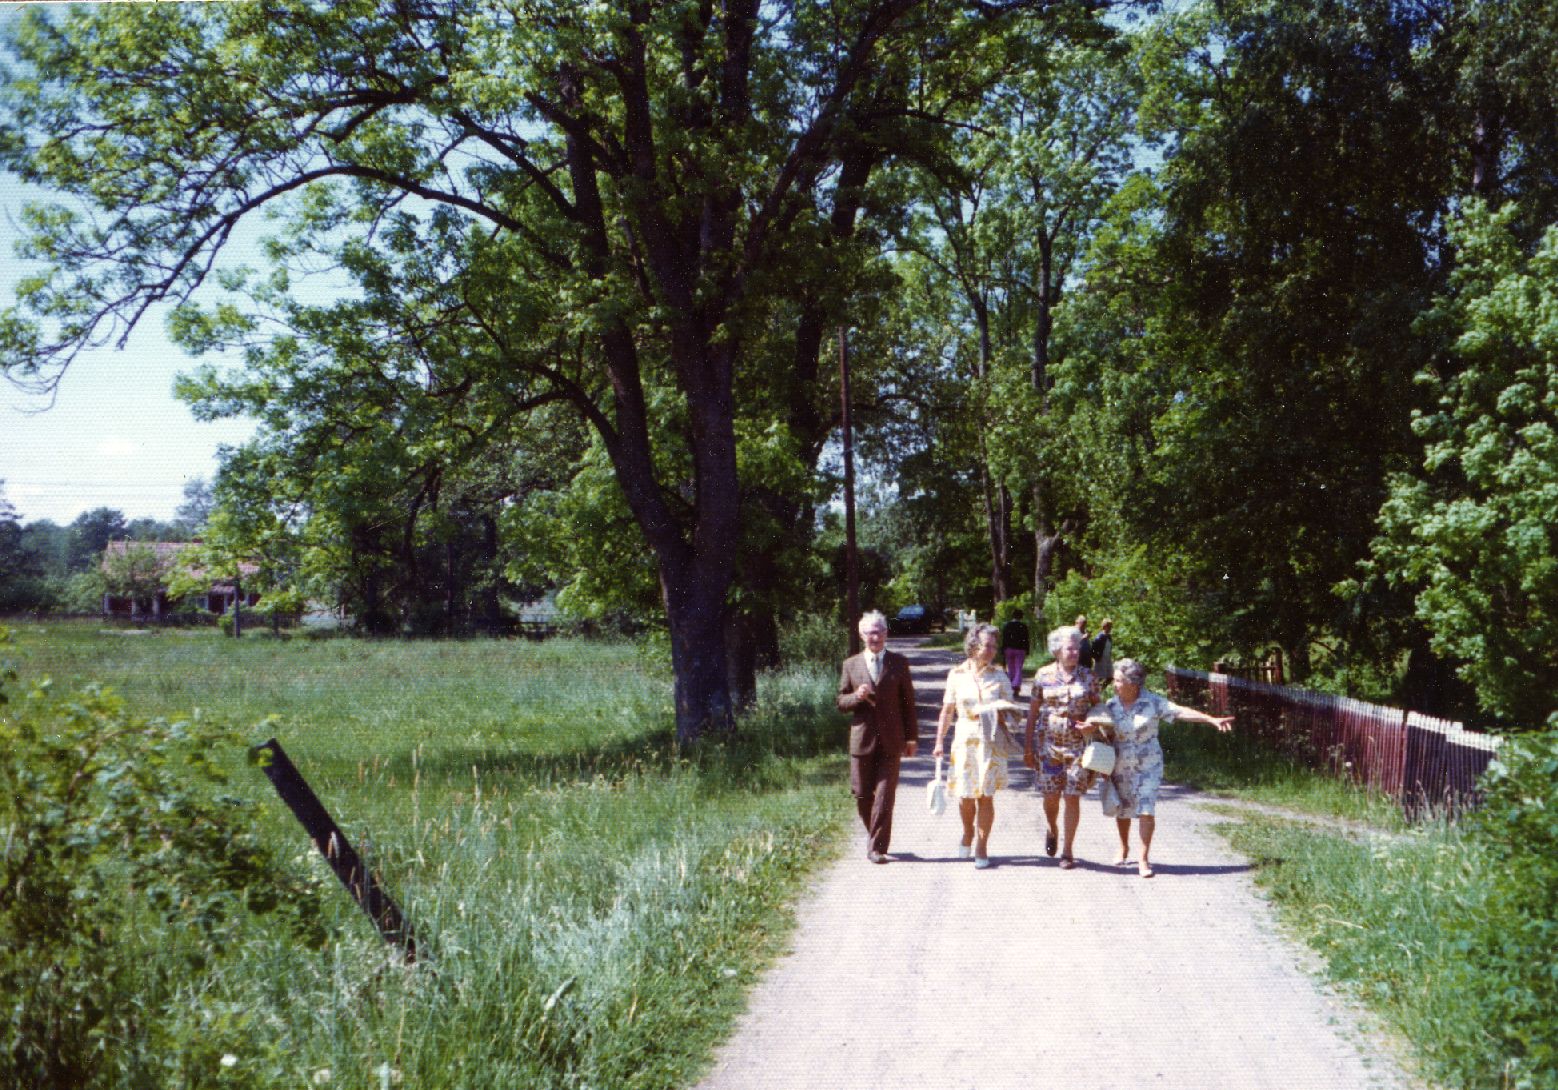 Karl Risitikivi, Liidia Mägi and others walking